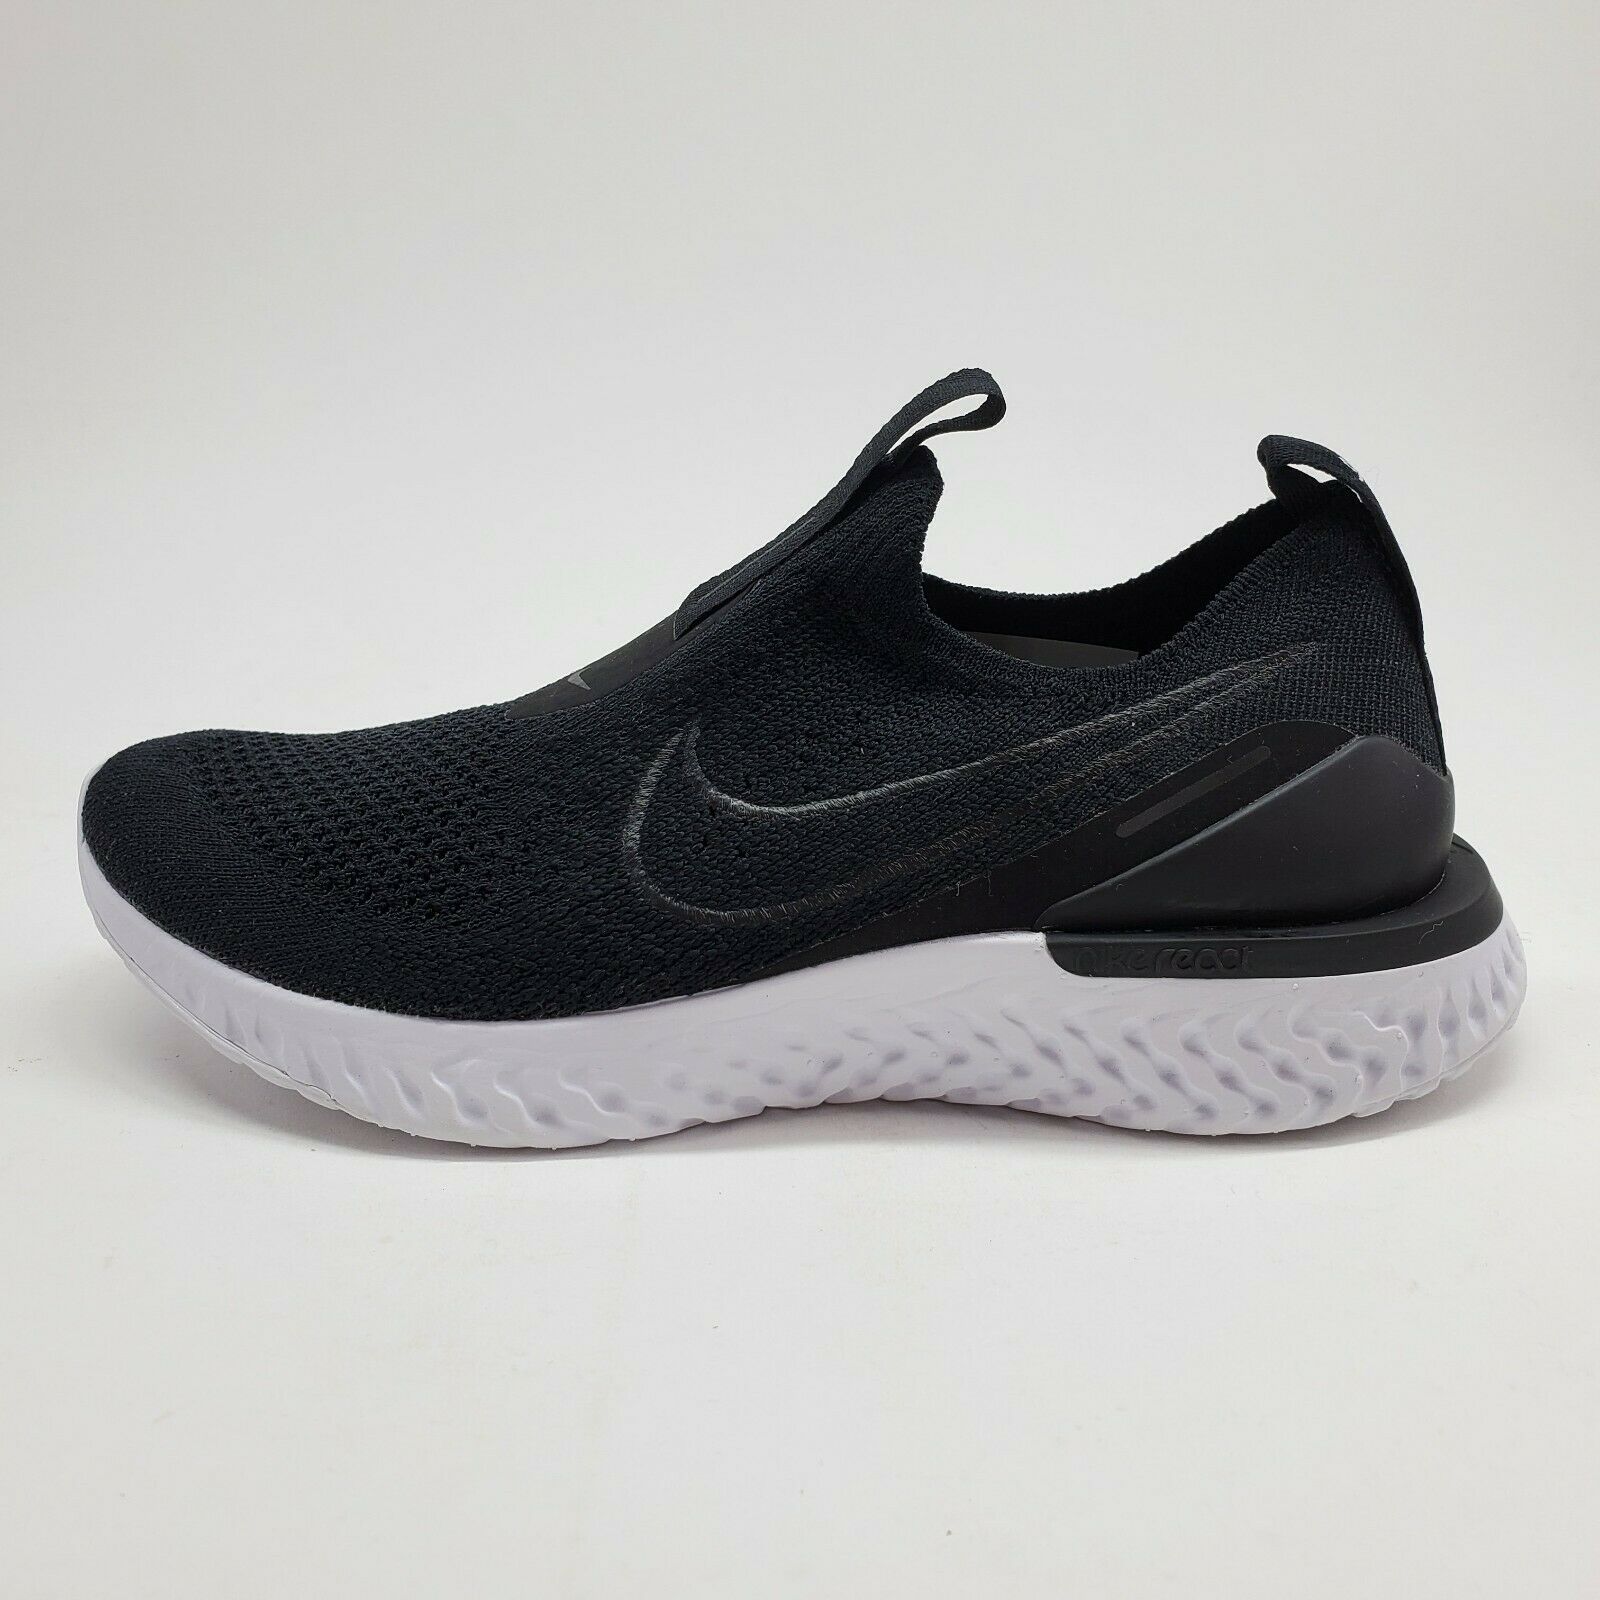 Nike Epic Phantom React Flyknit Womens Sz 5 Shoes Black White BV0415-001 NEW